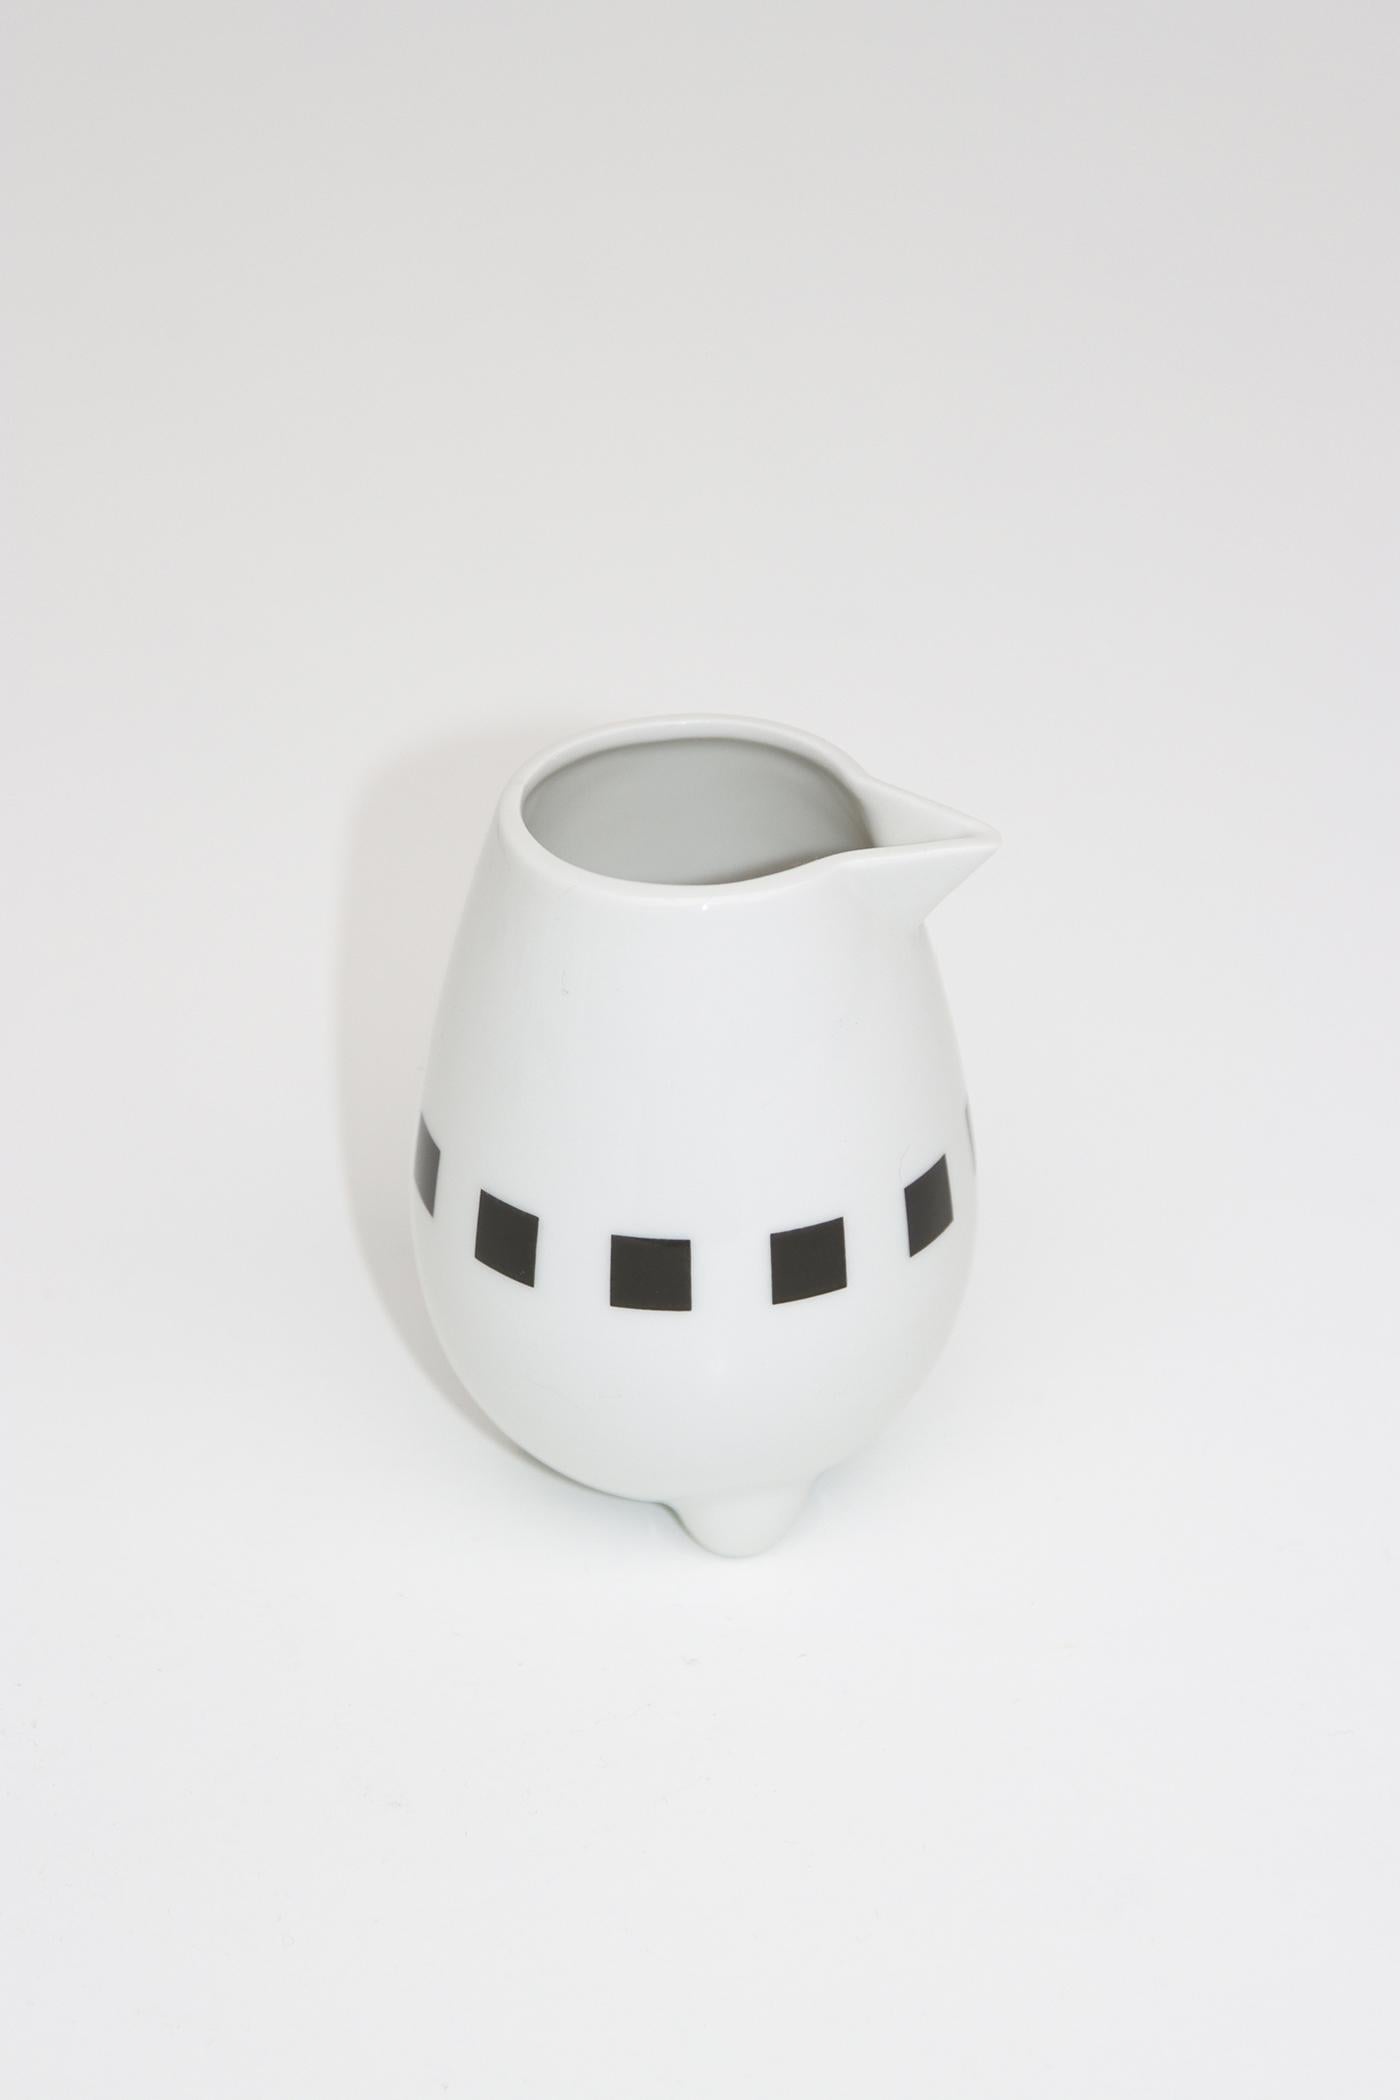 European Matteo Thun Fantasia Porcelain Tea Set